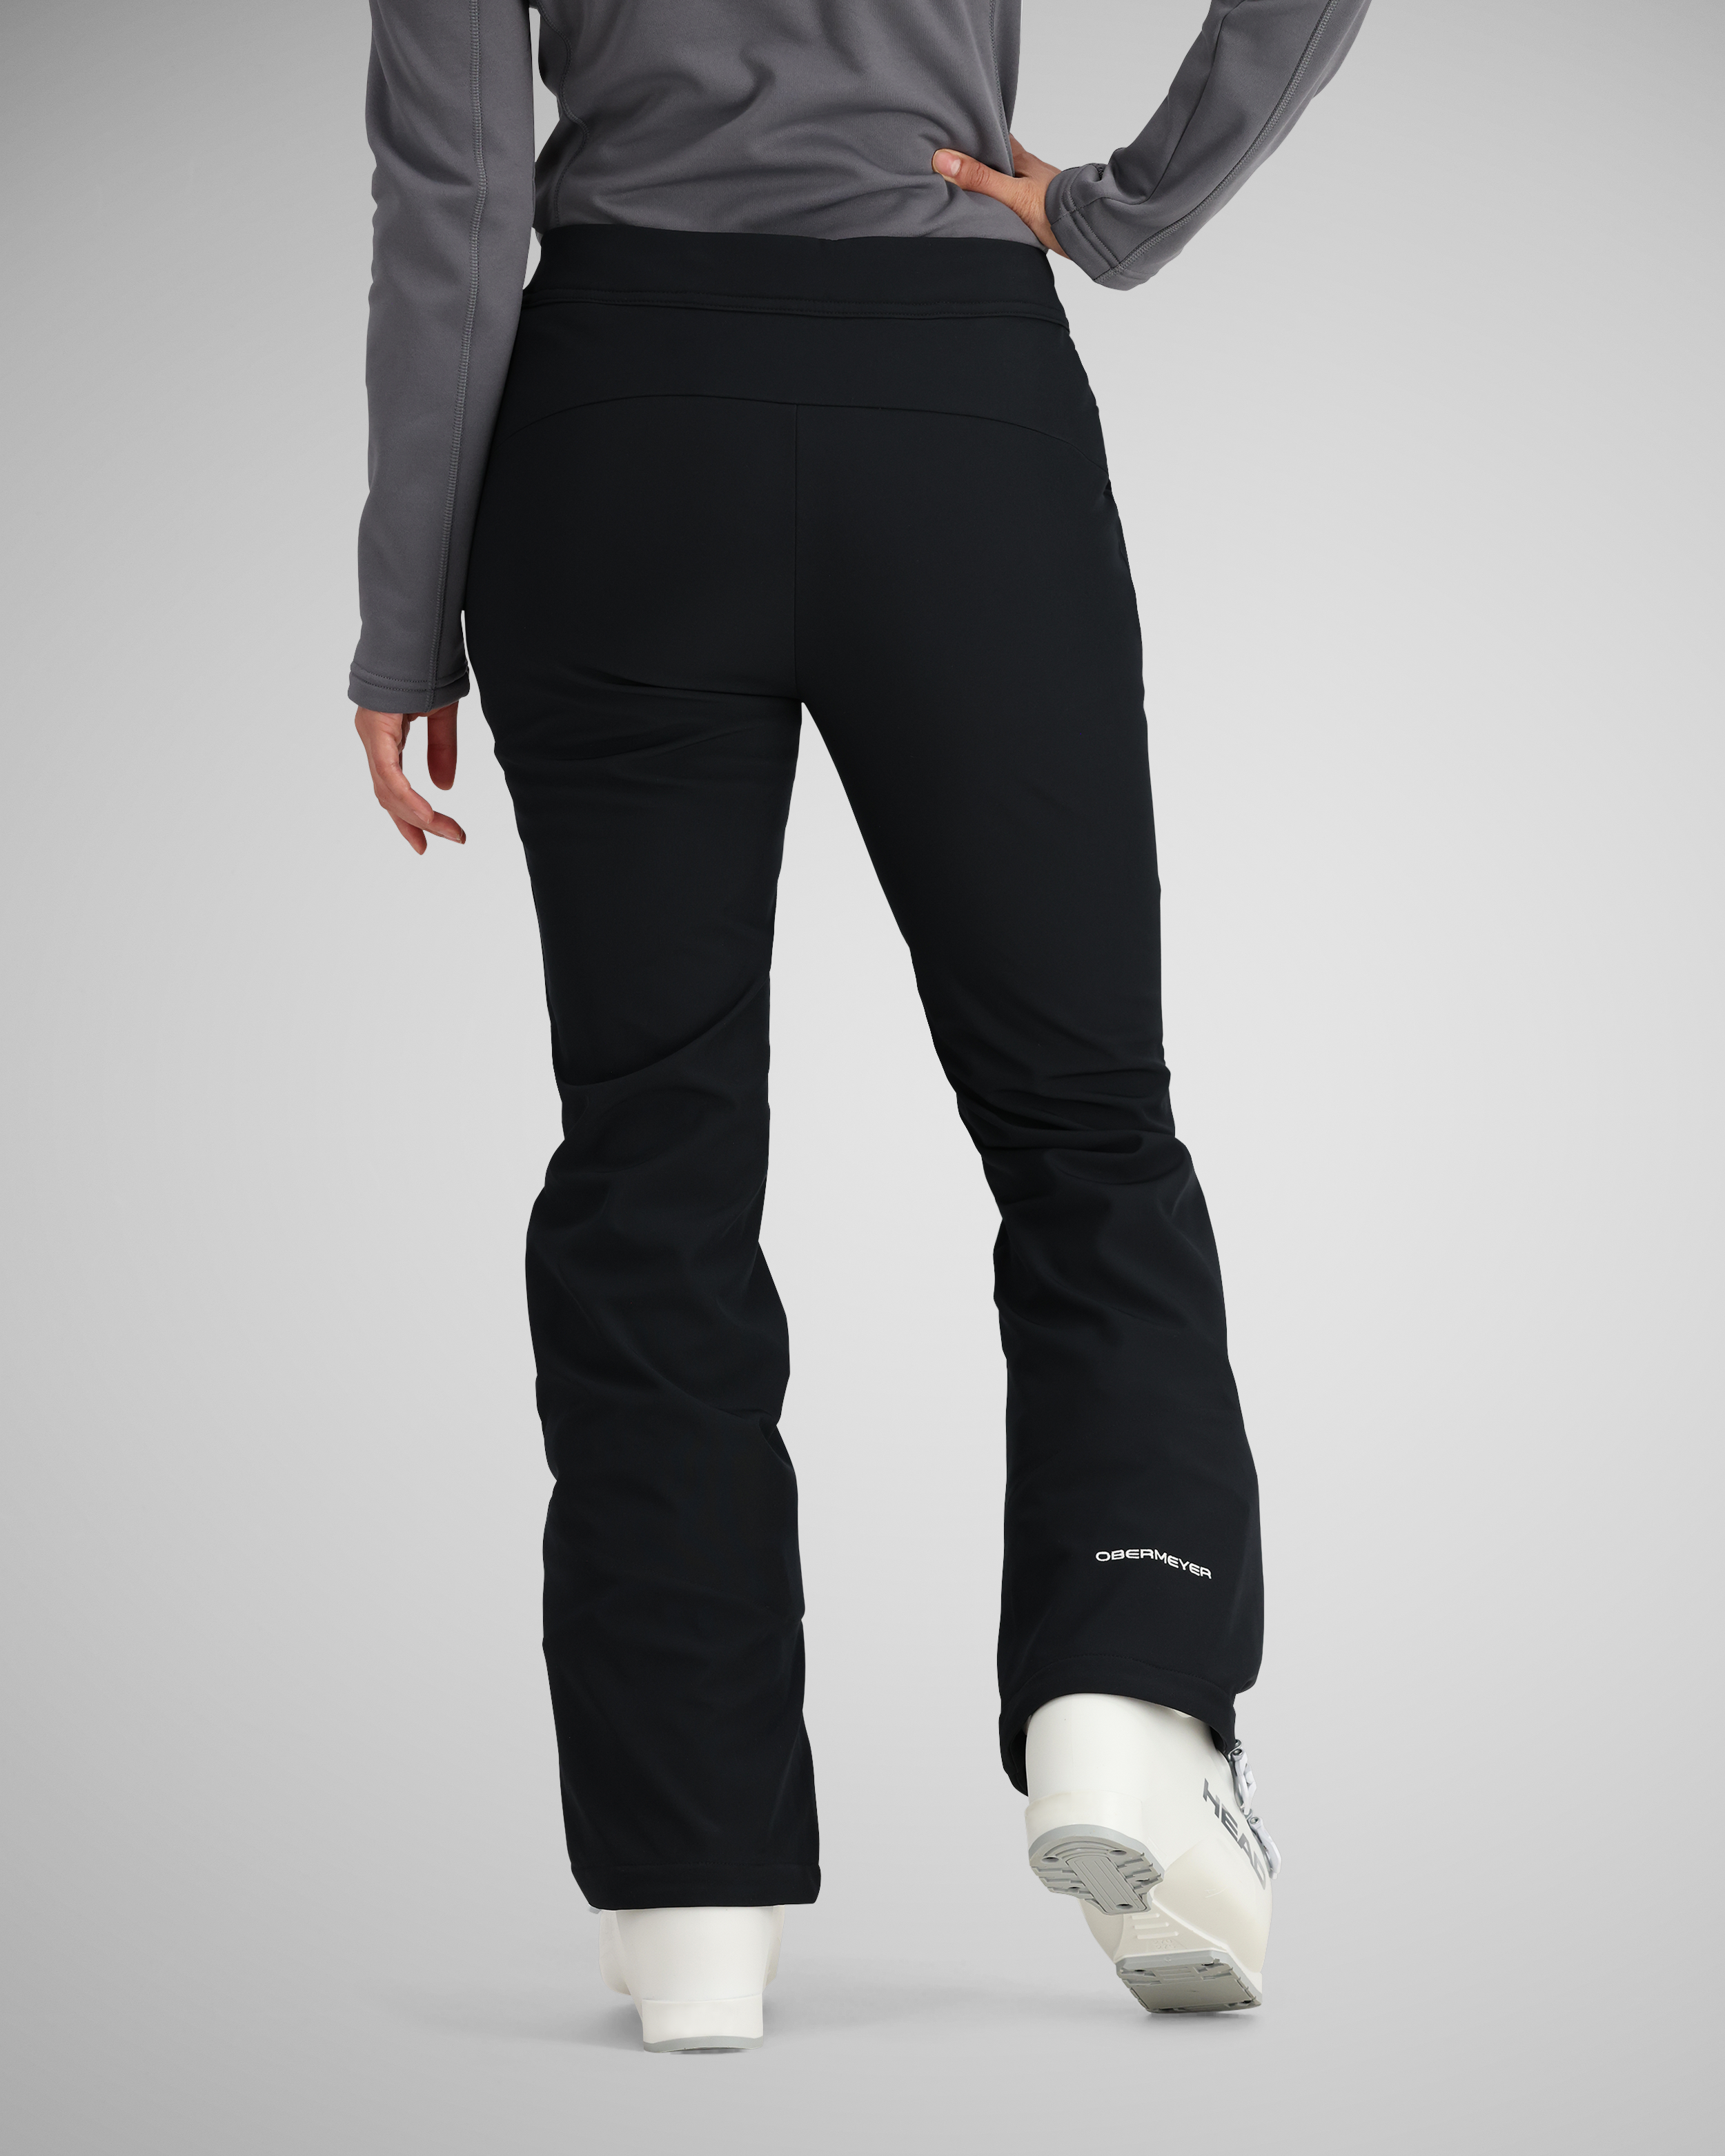 Gerry Women's Snow-Tech Fleece Lined Stretch Ski Pant, Black, Medium -  Walmart.com